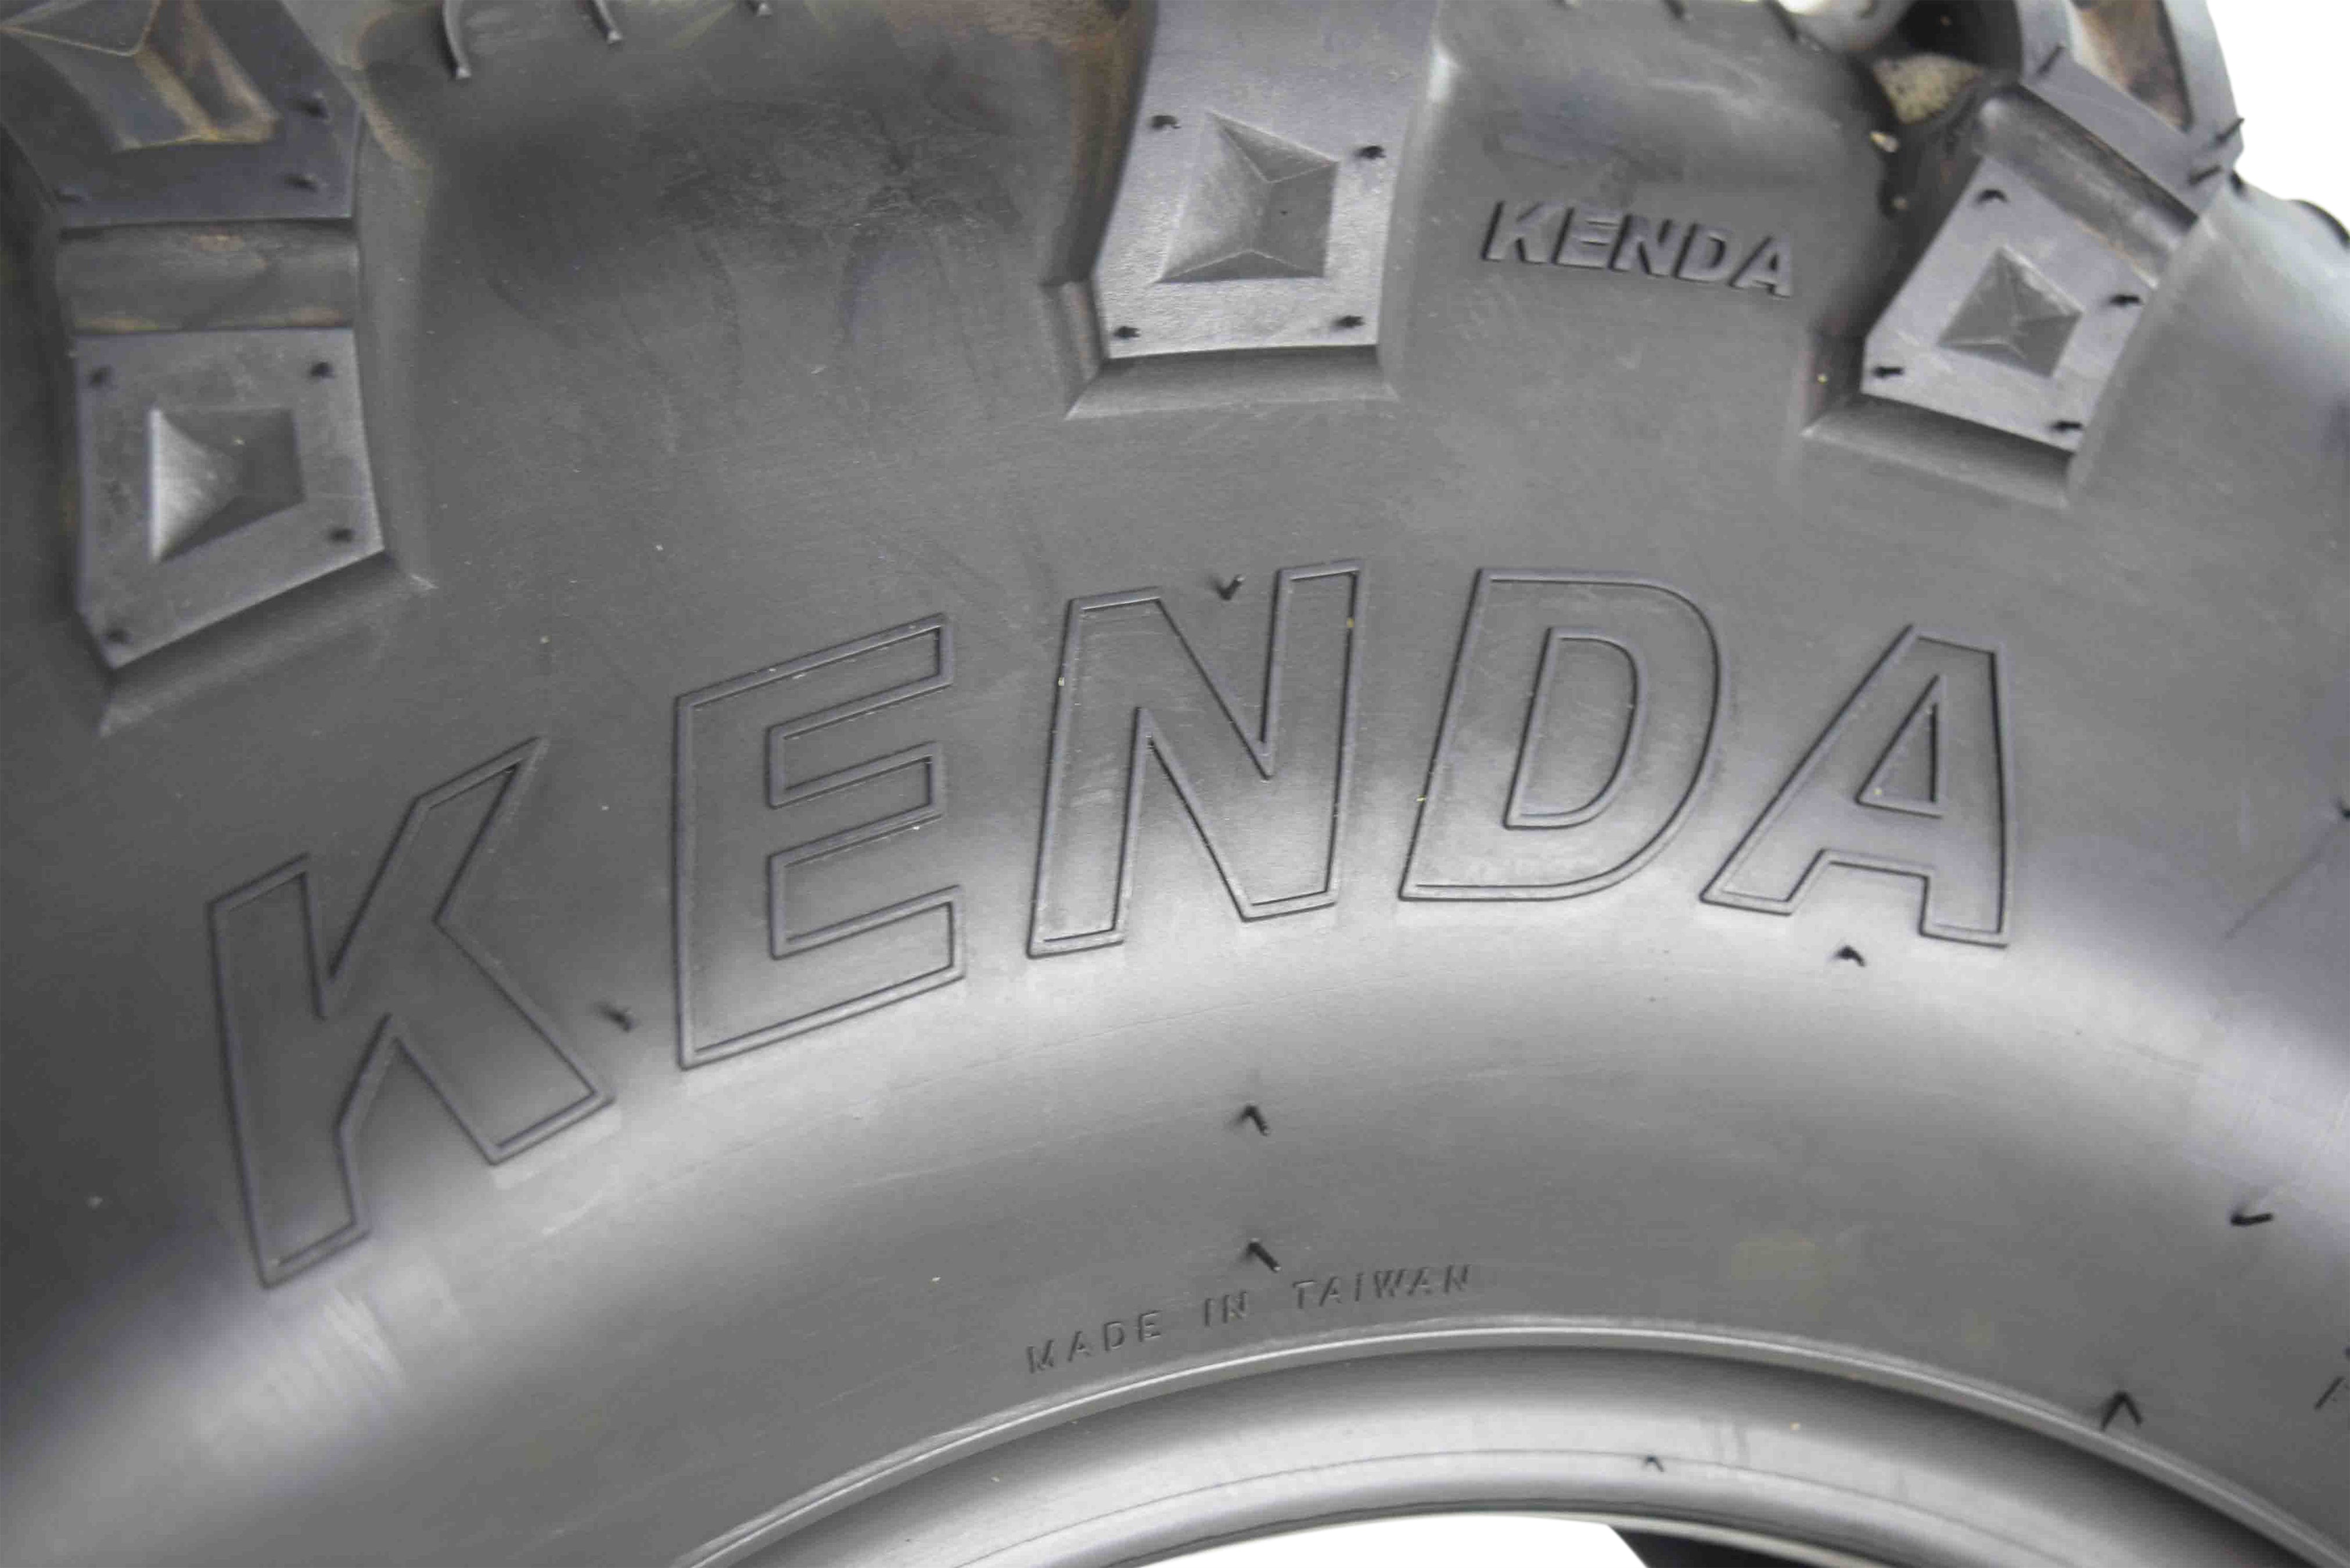 Kenda Bear Claw EVO  27x9-12 Front ATV/UTV Tires 2 Pack with Bottle Opener Keychain